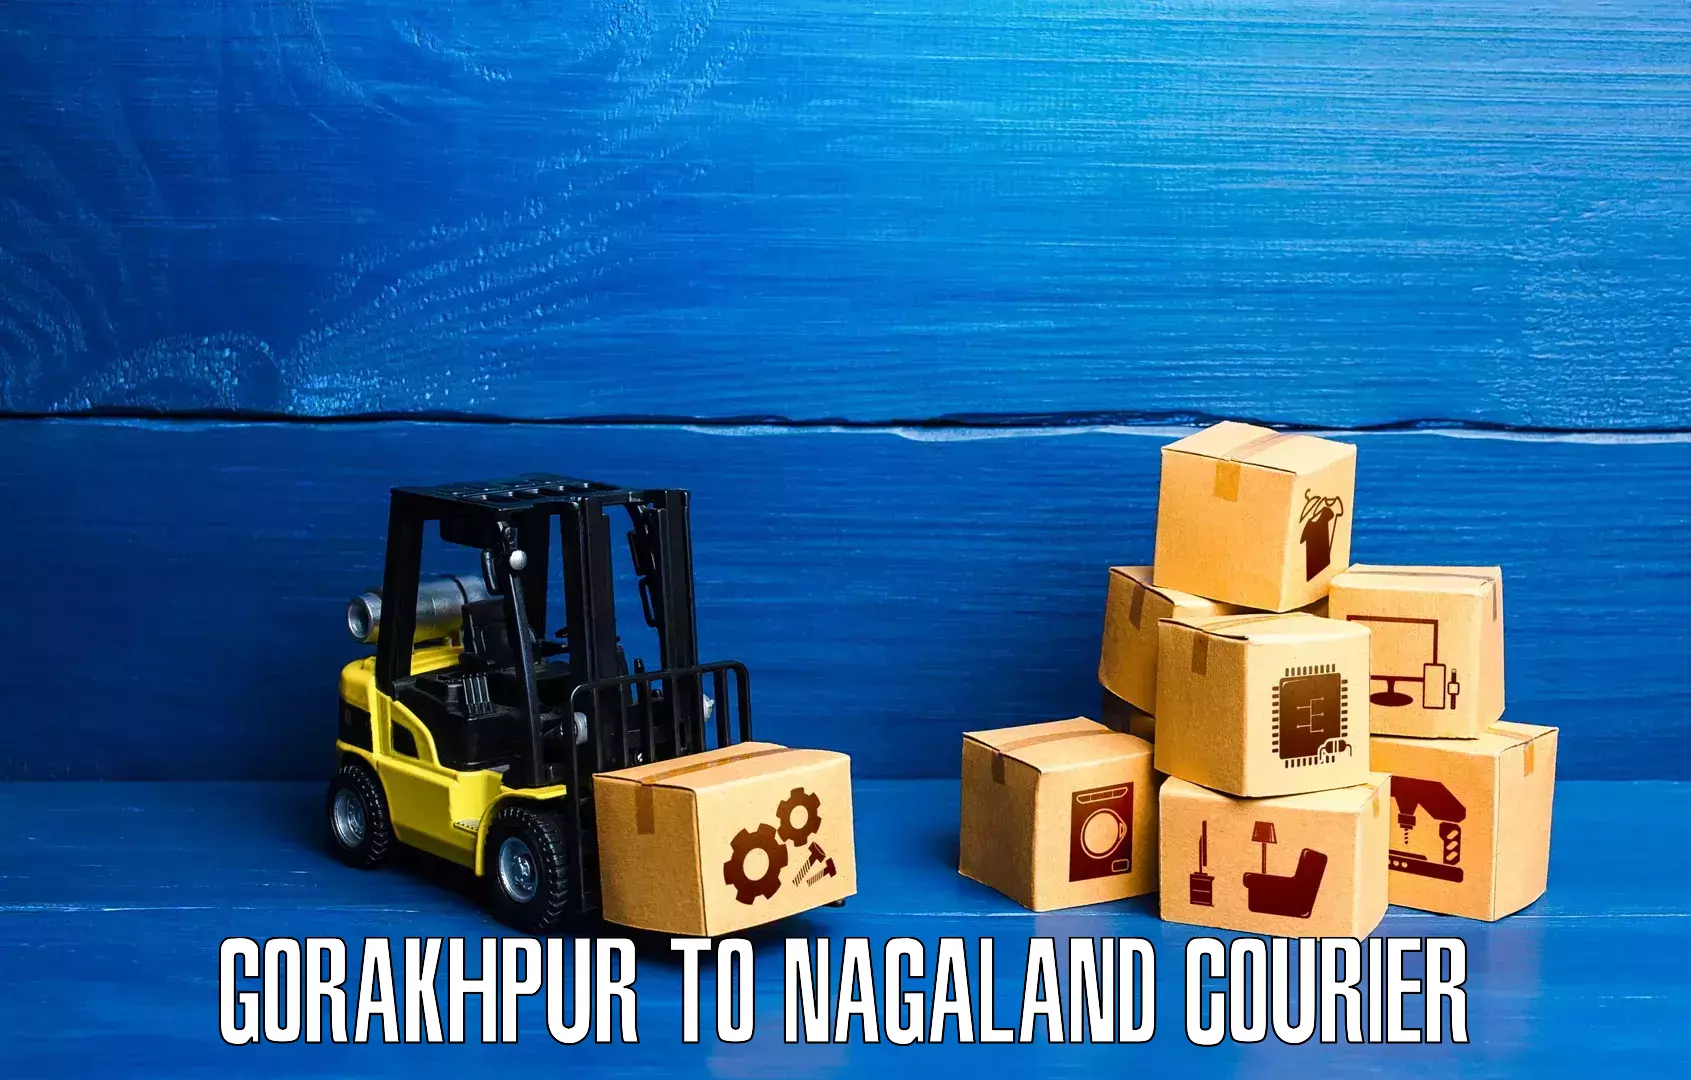 Nationwide parcel services Gorakhpur to Nagaland